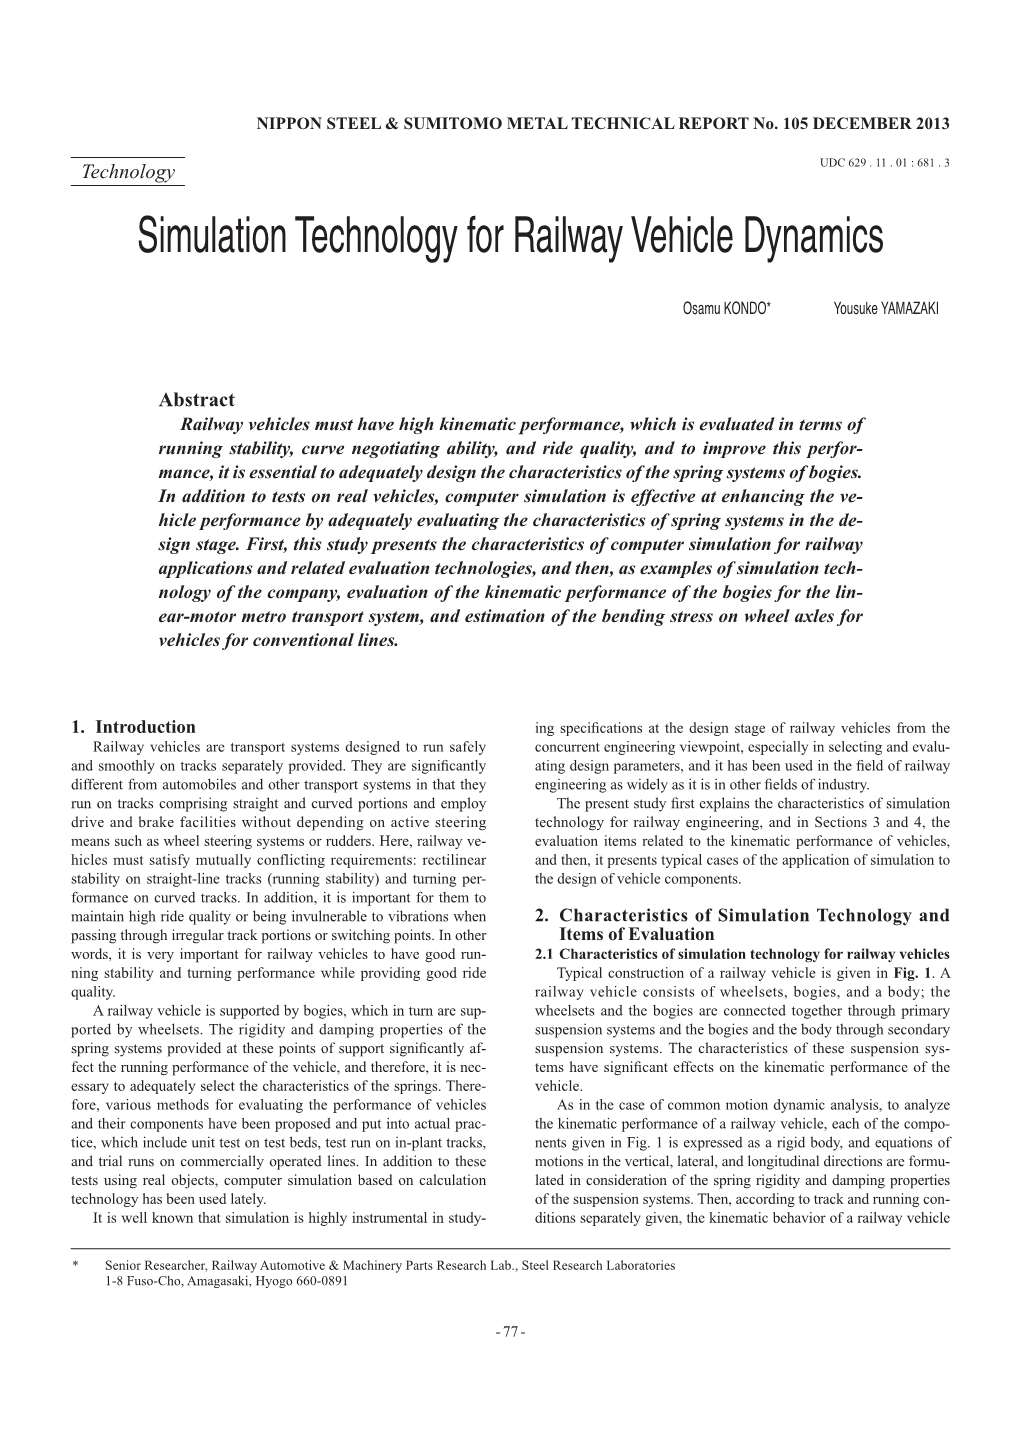 Simulation Technology for Railway Vehicle Dynamics